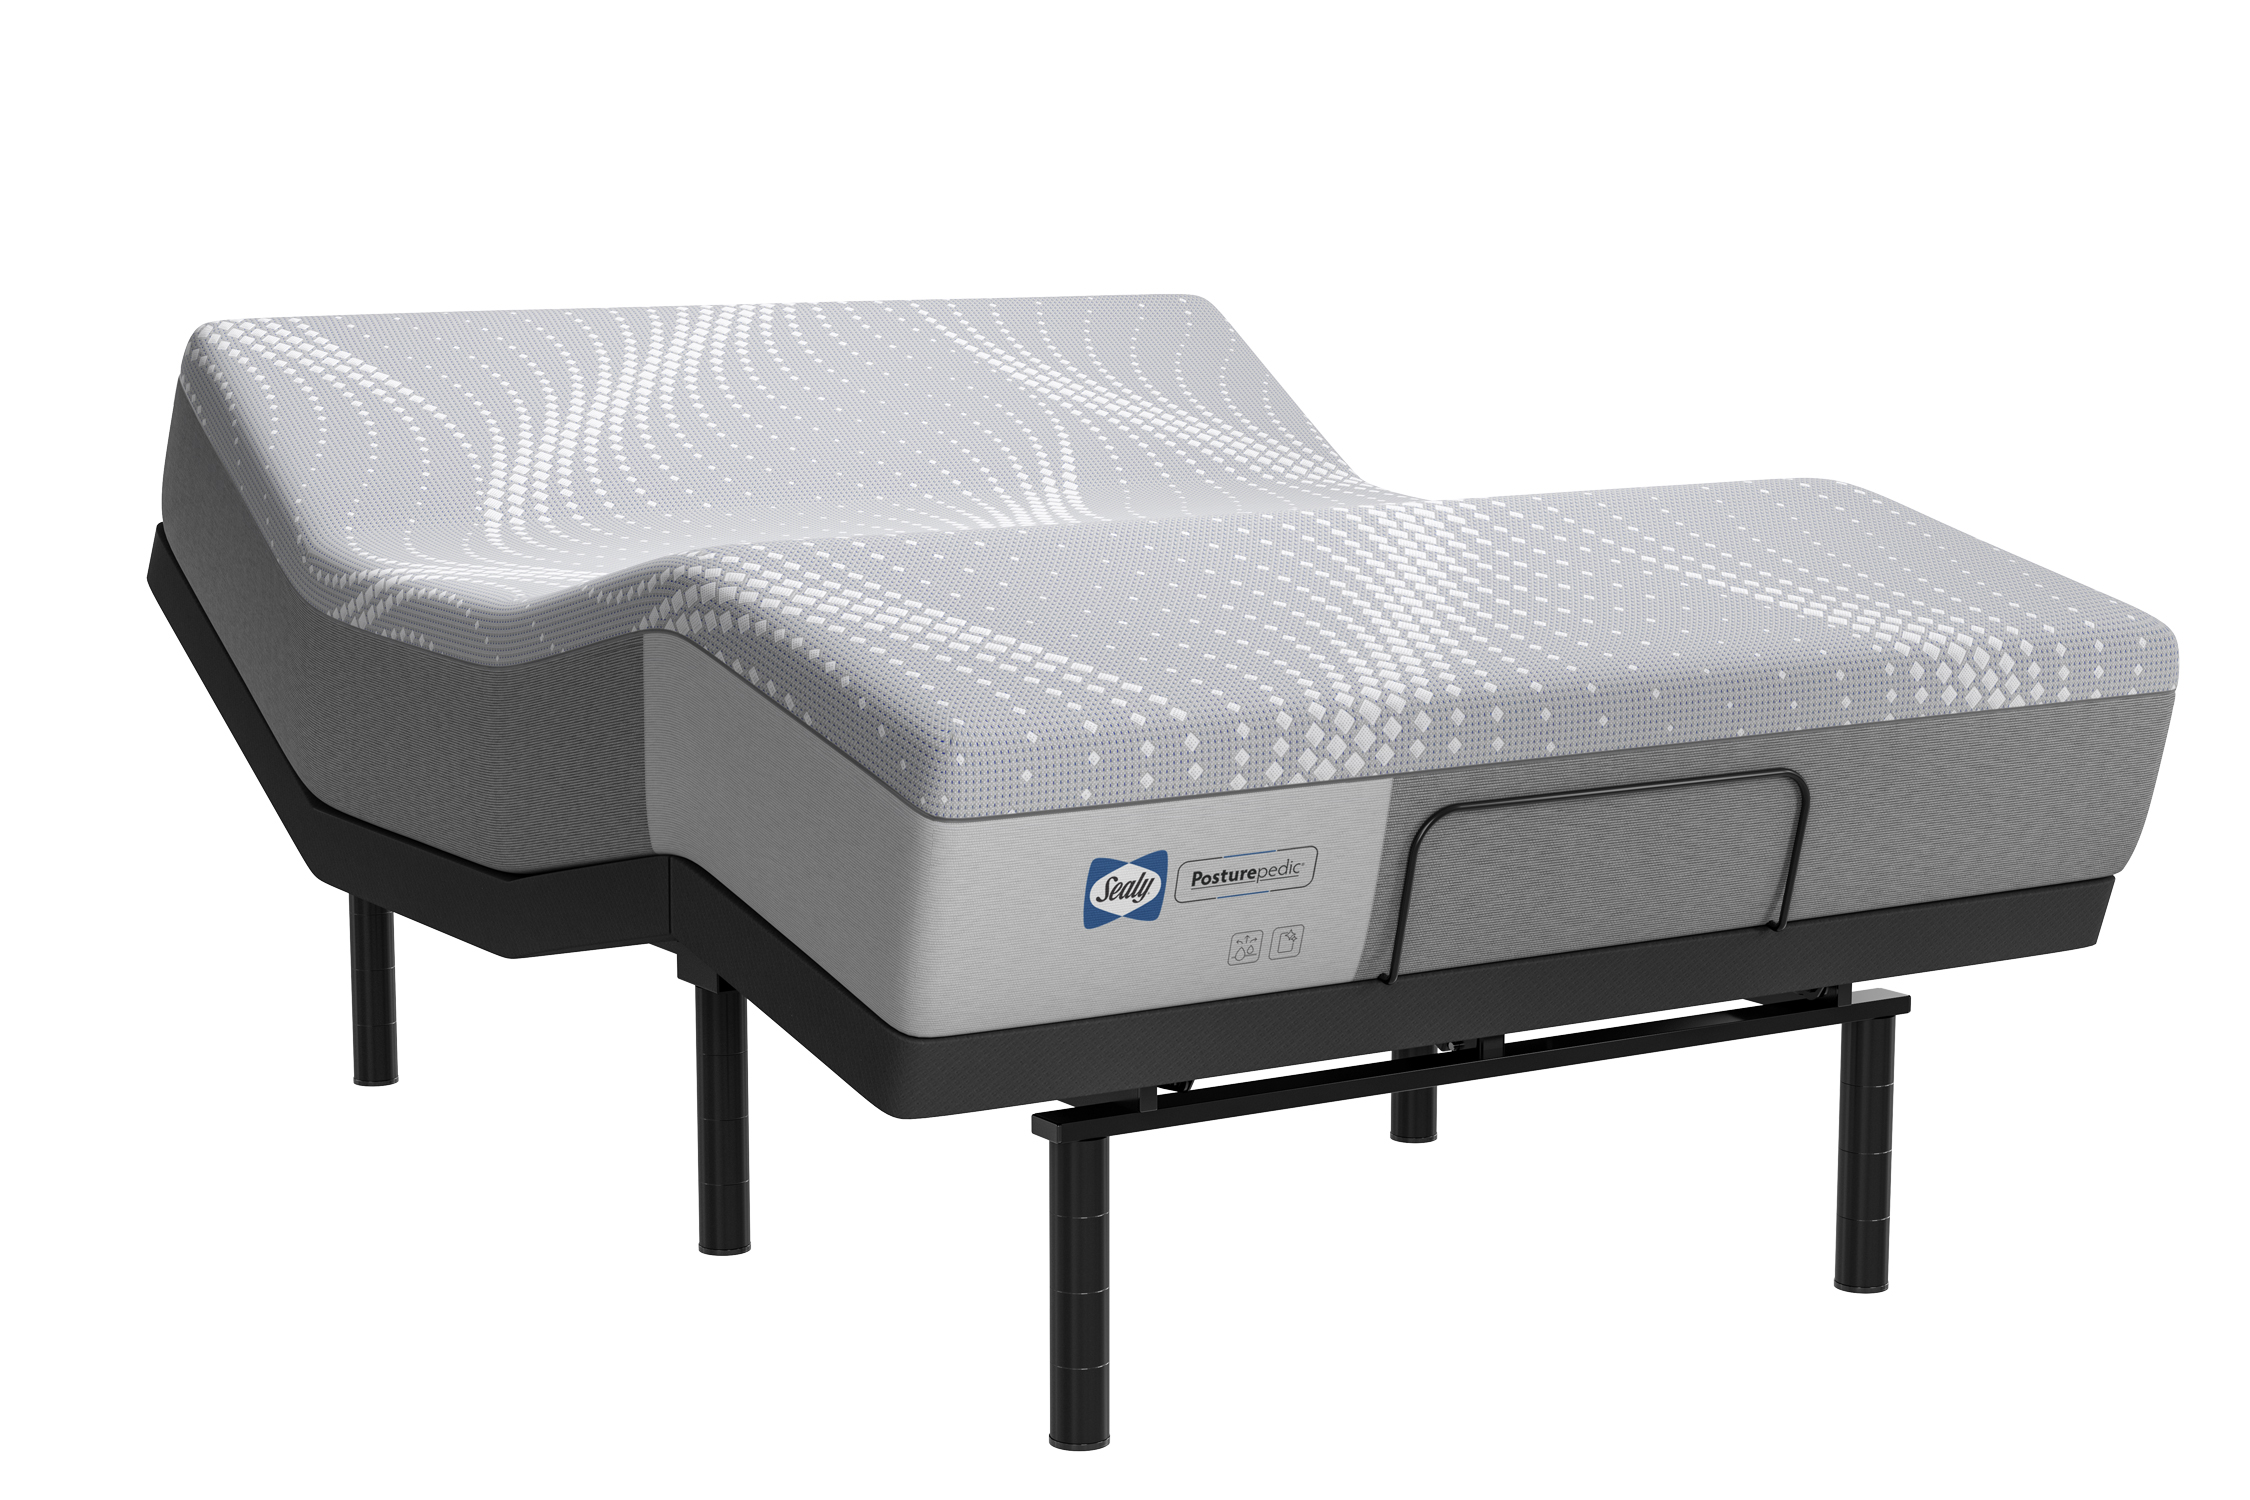 Sealy Salinger Medium Hybrid Mattress, Can You Use A Hybrid Mattress On An Adjustable Bed